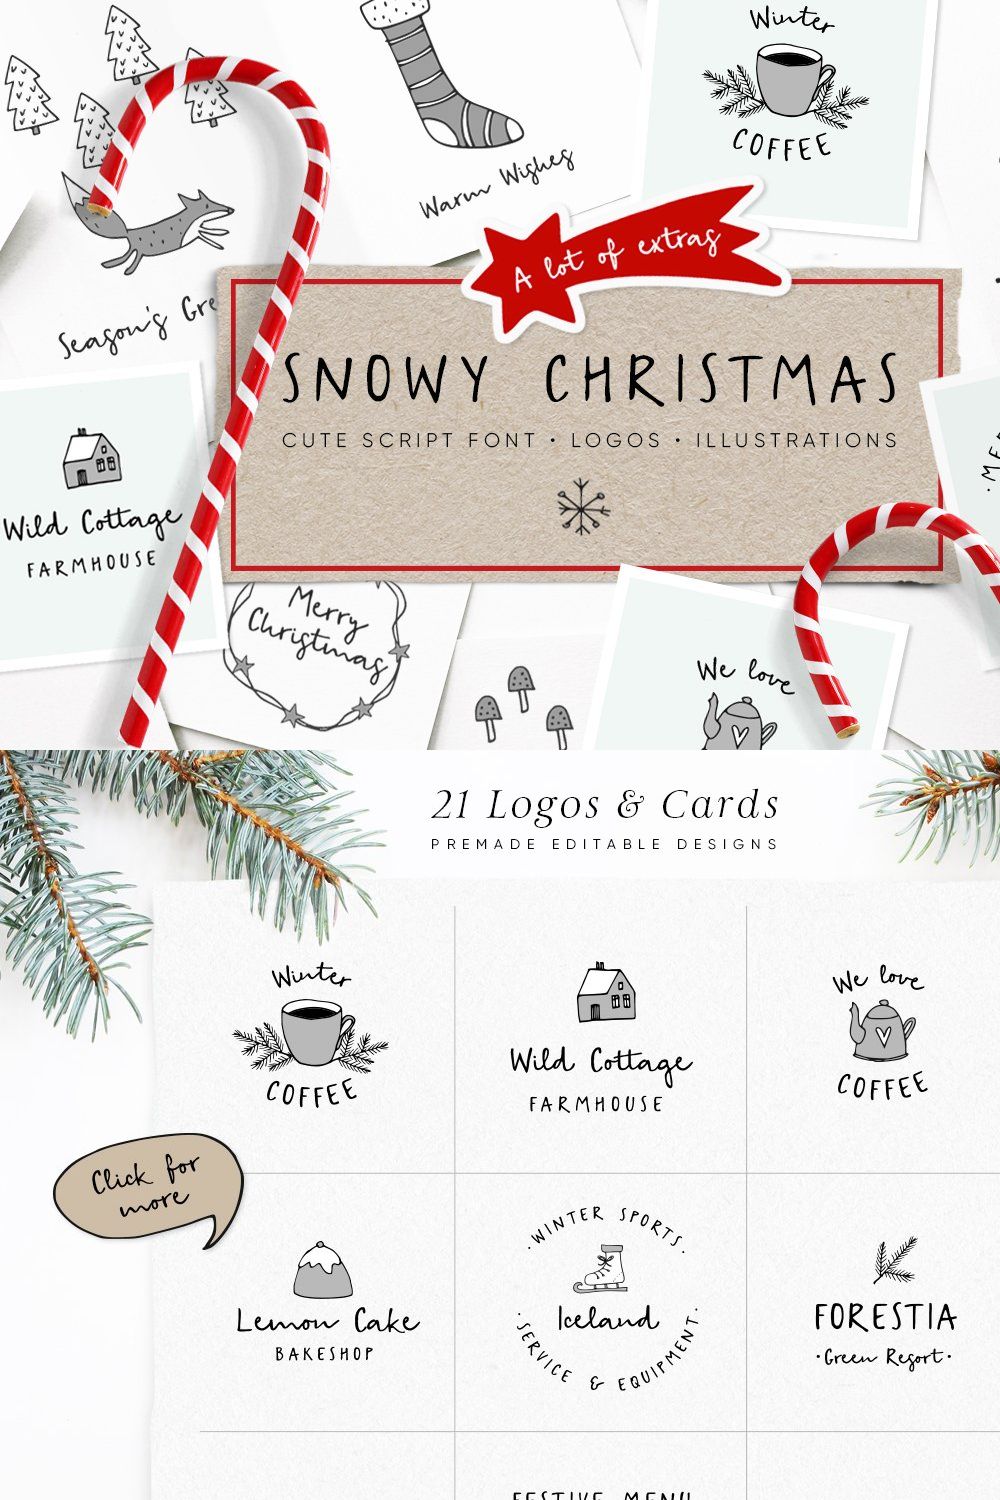 Snowy Christmas script font & logos pinterest preview image.